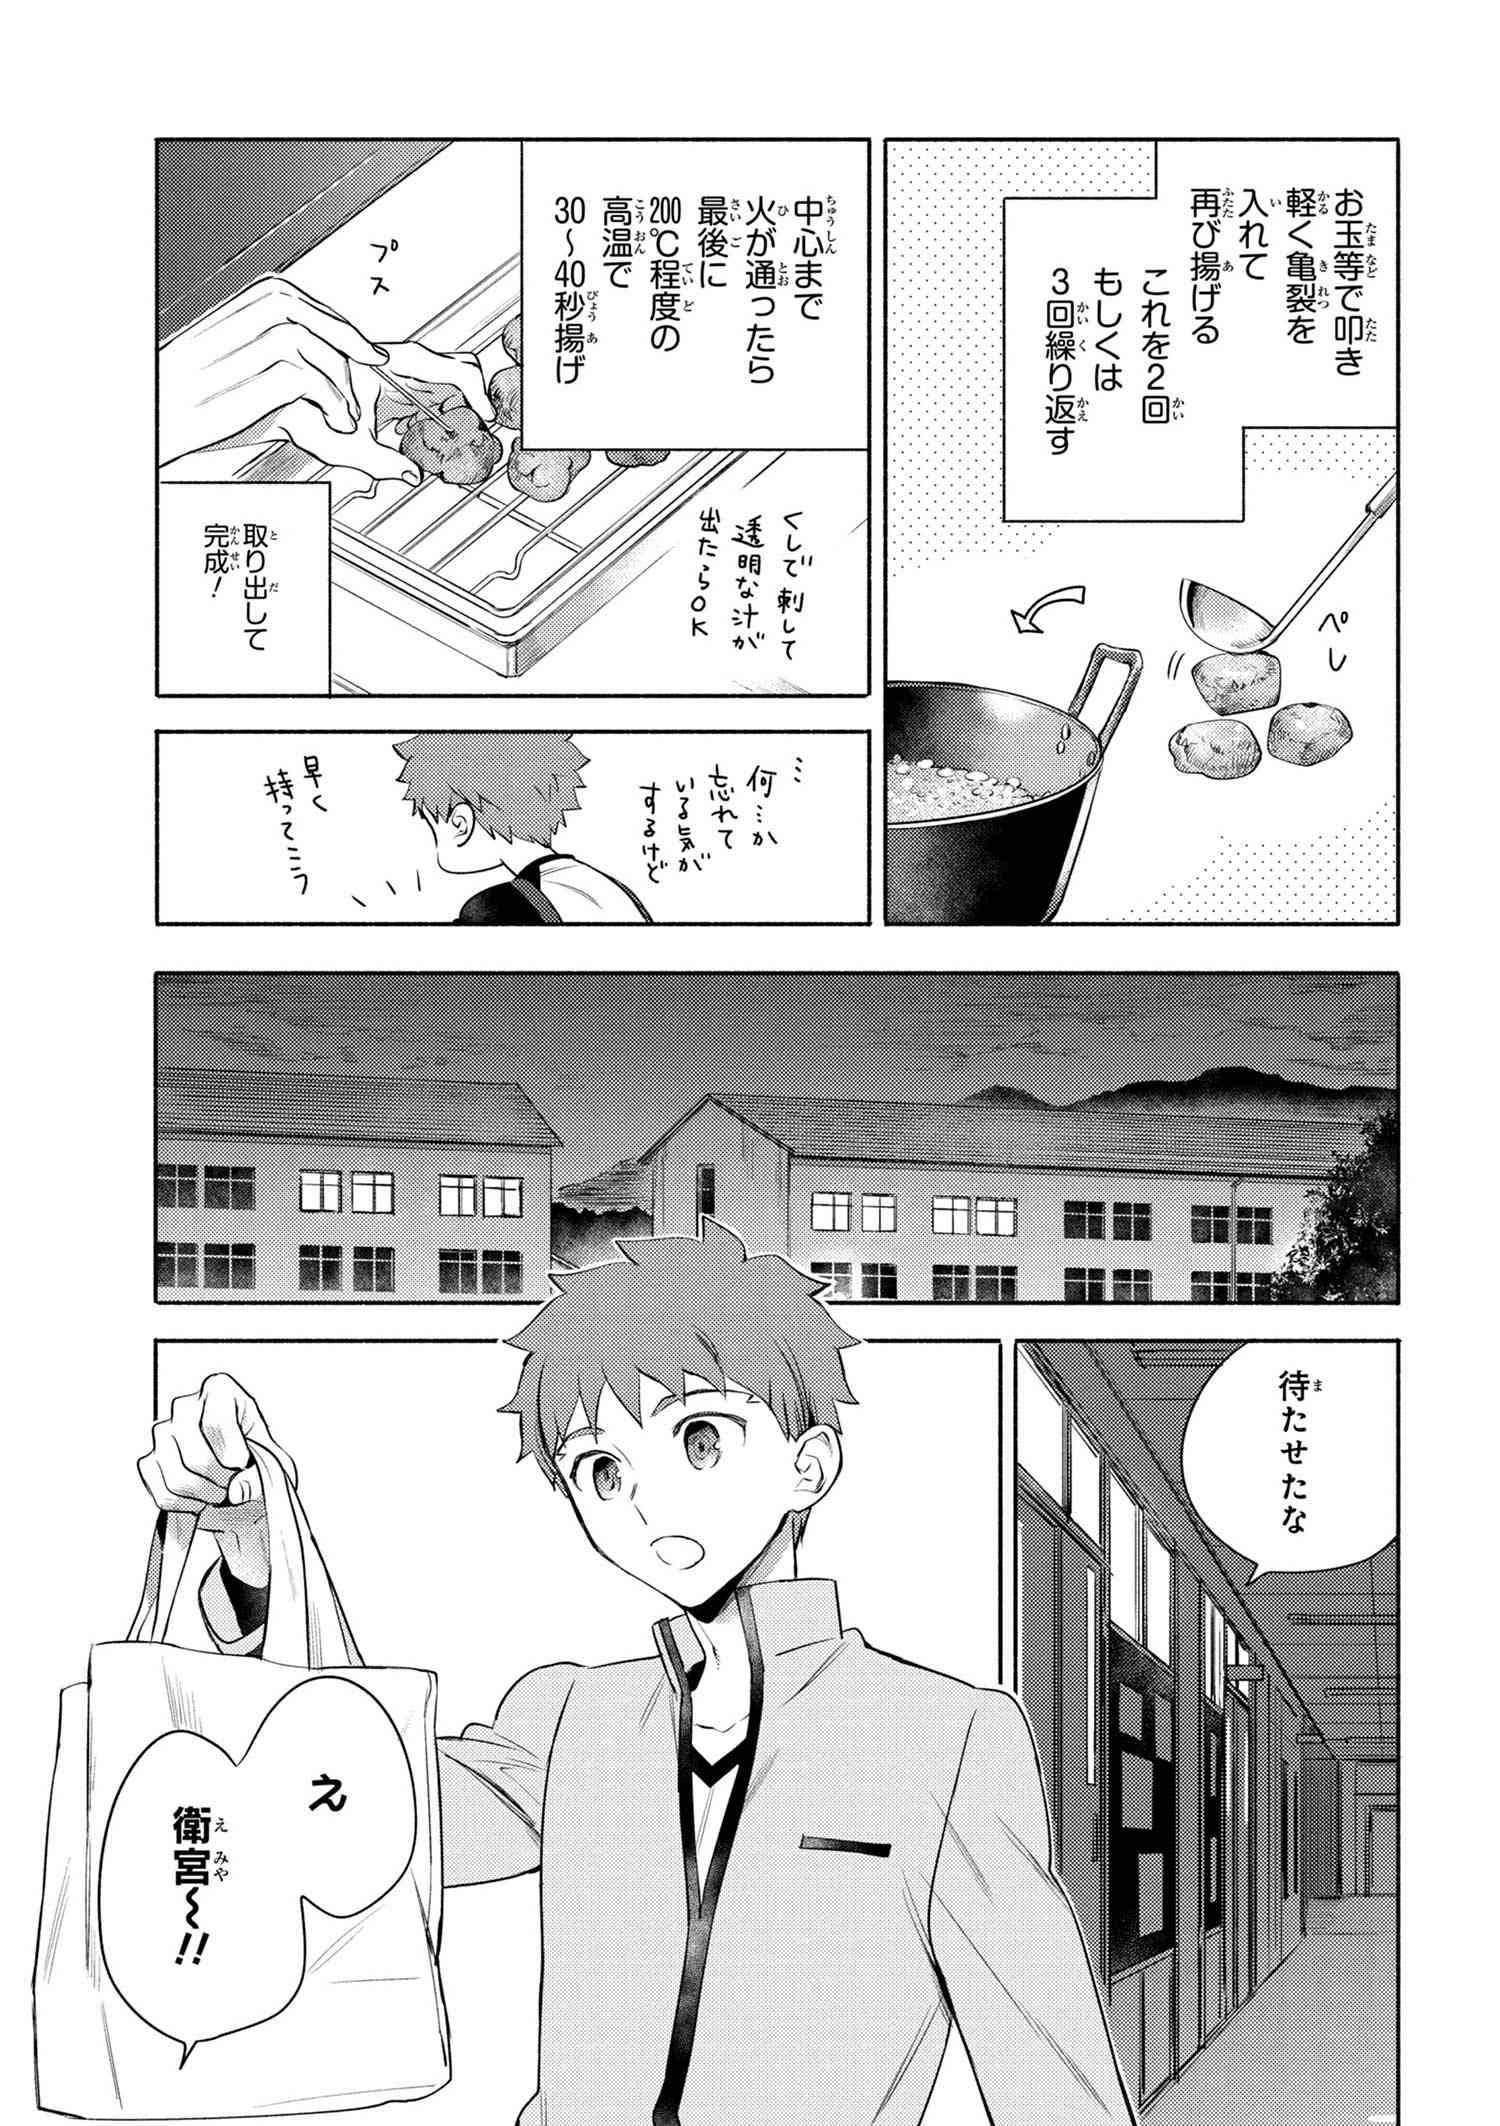 Emiya-san Chi no Kyou no Gohan - Chapter 10 - Page 7